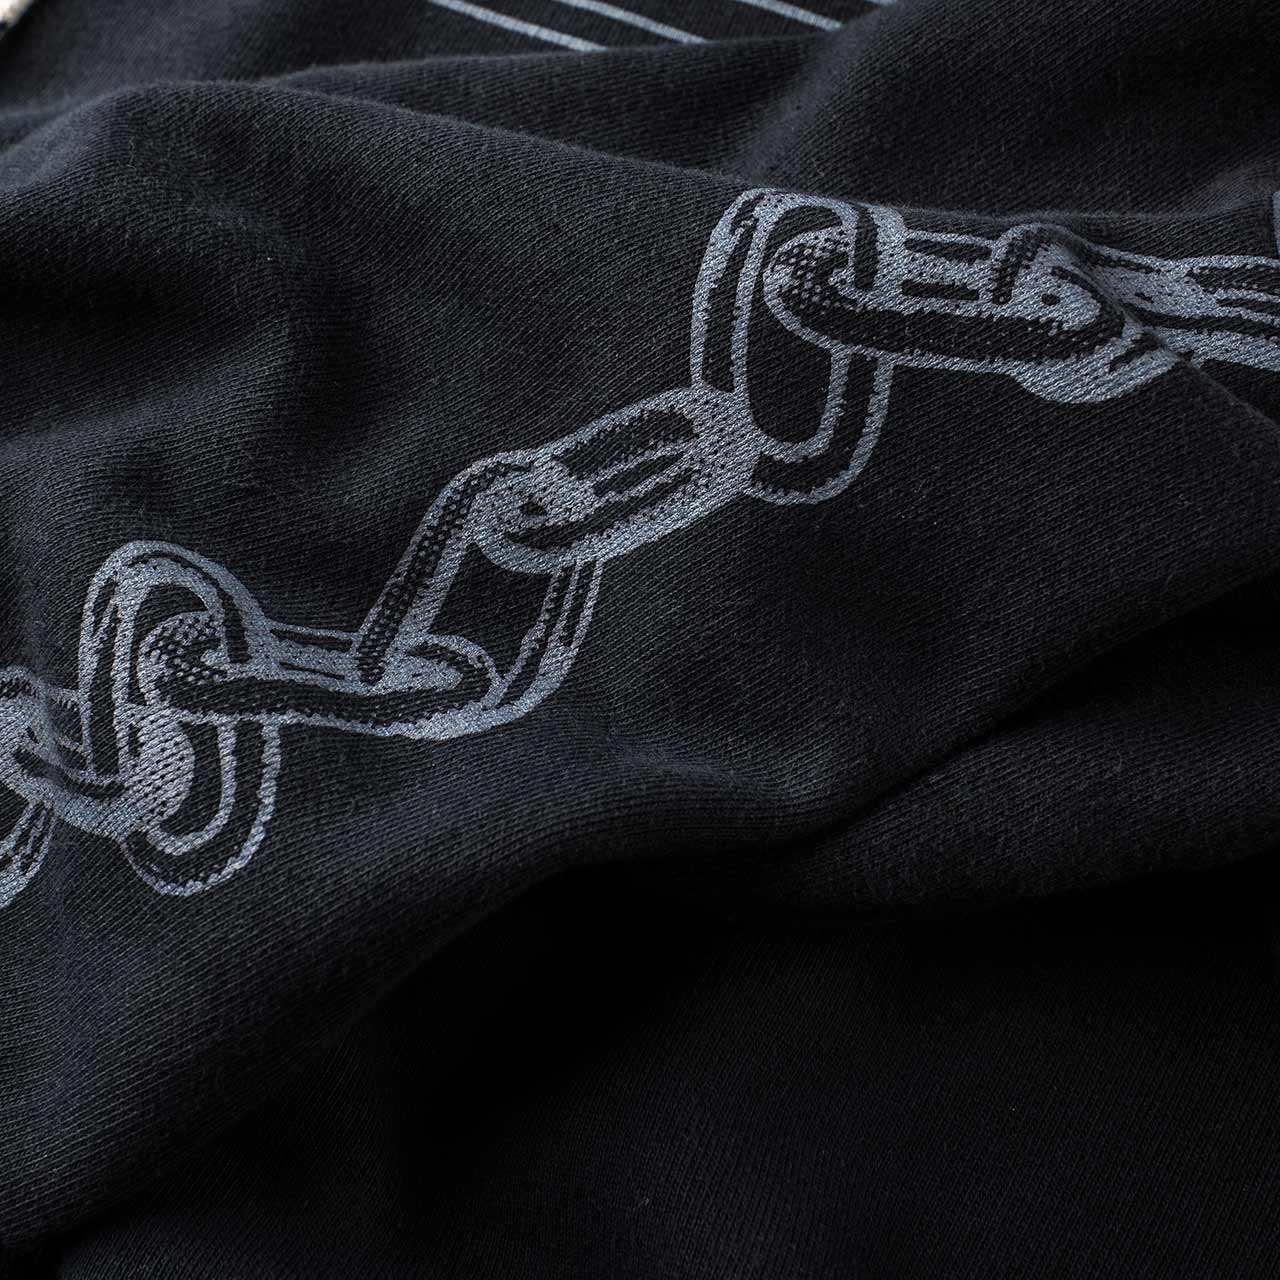 aries 2 chains hoodie (black / grey) - fqar20008-blk - a.plus - Image - 3